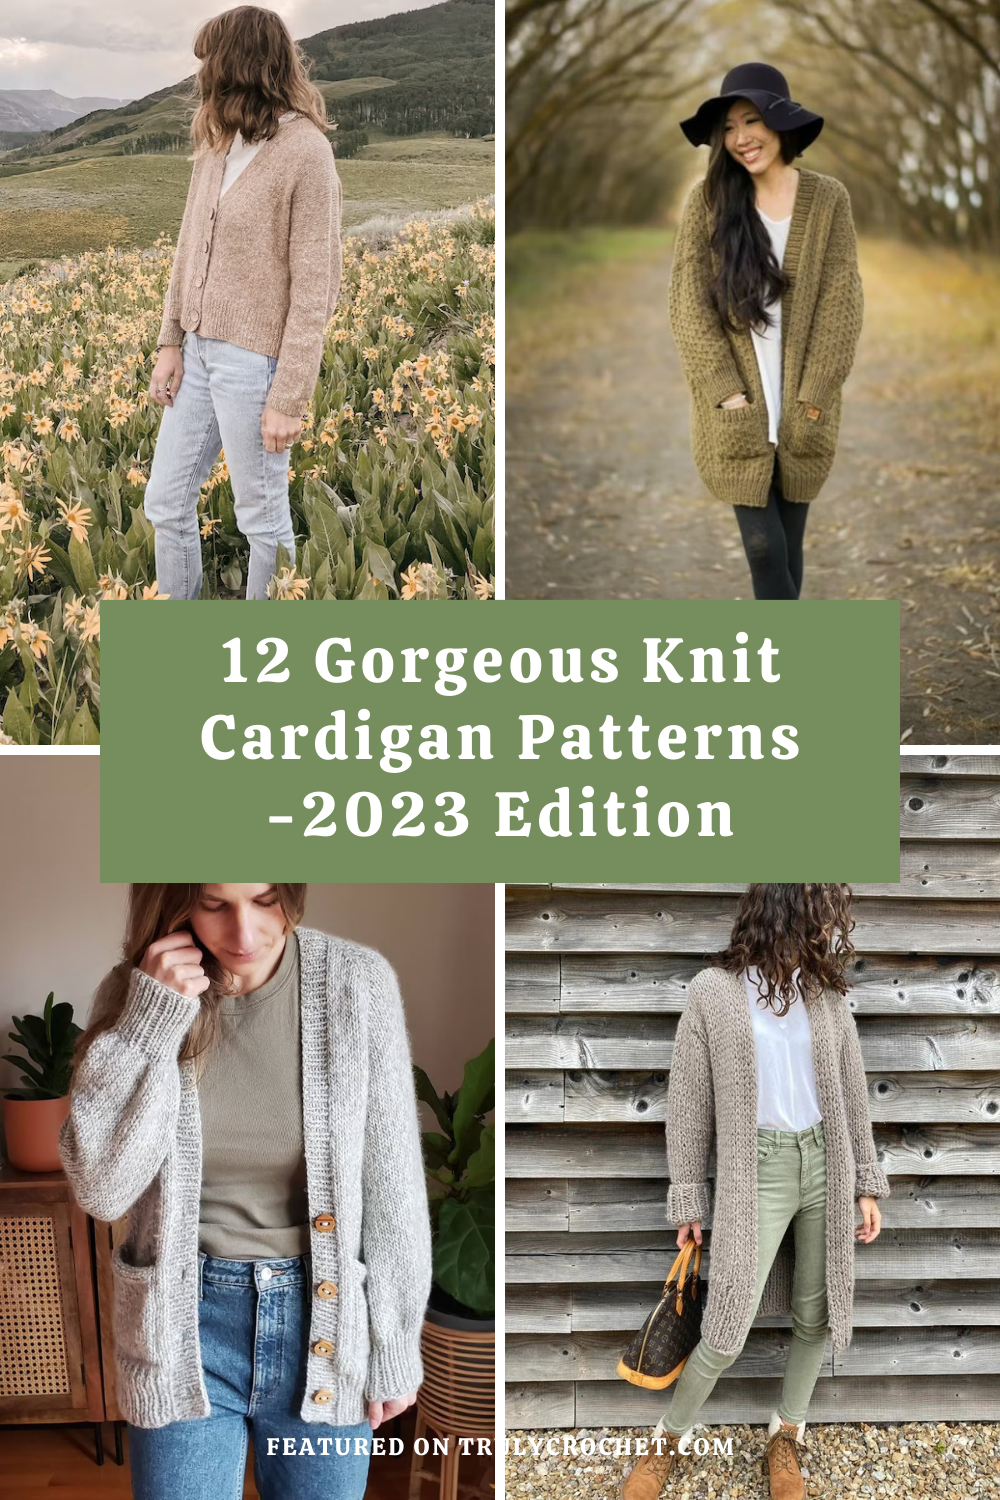 12 Gorgeous Knit Cardigan Patterns - 2023 edition